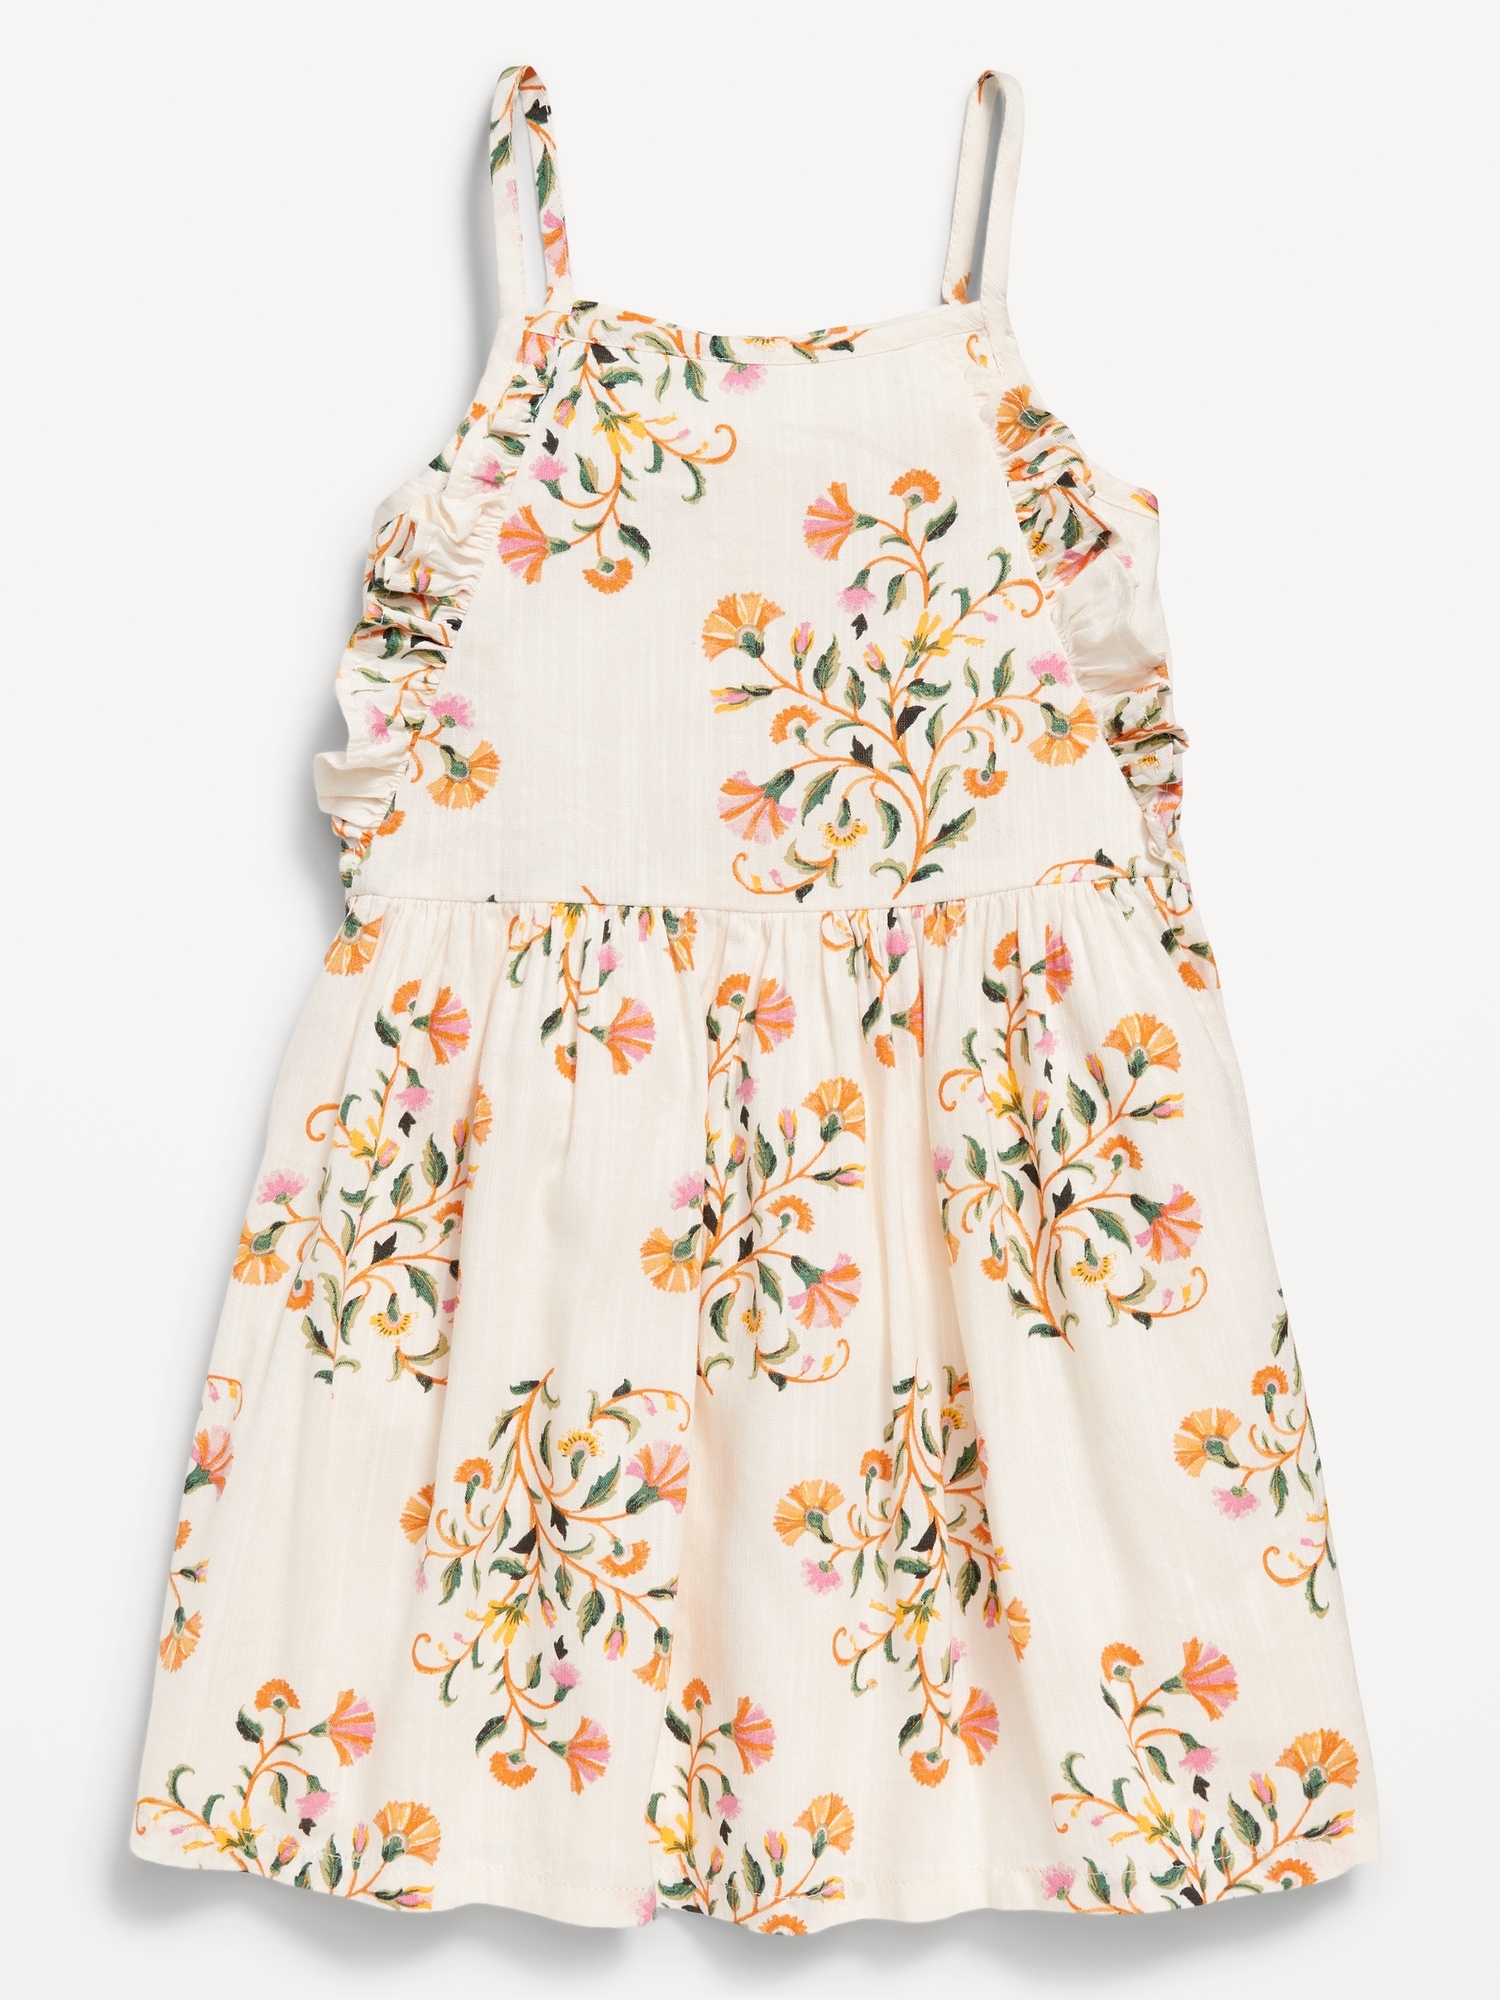 Printed Sleeveless Ruffle-Trim Dress for Toddler Girls